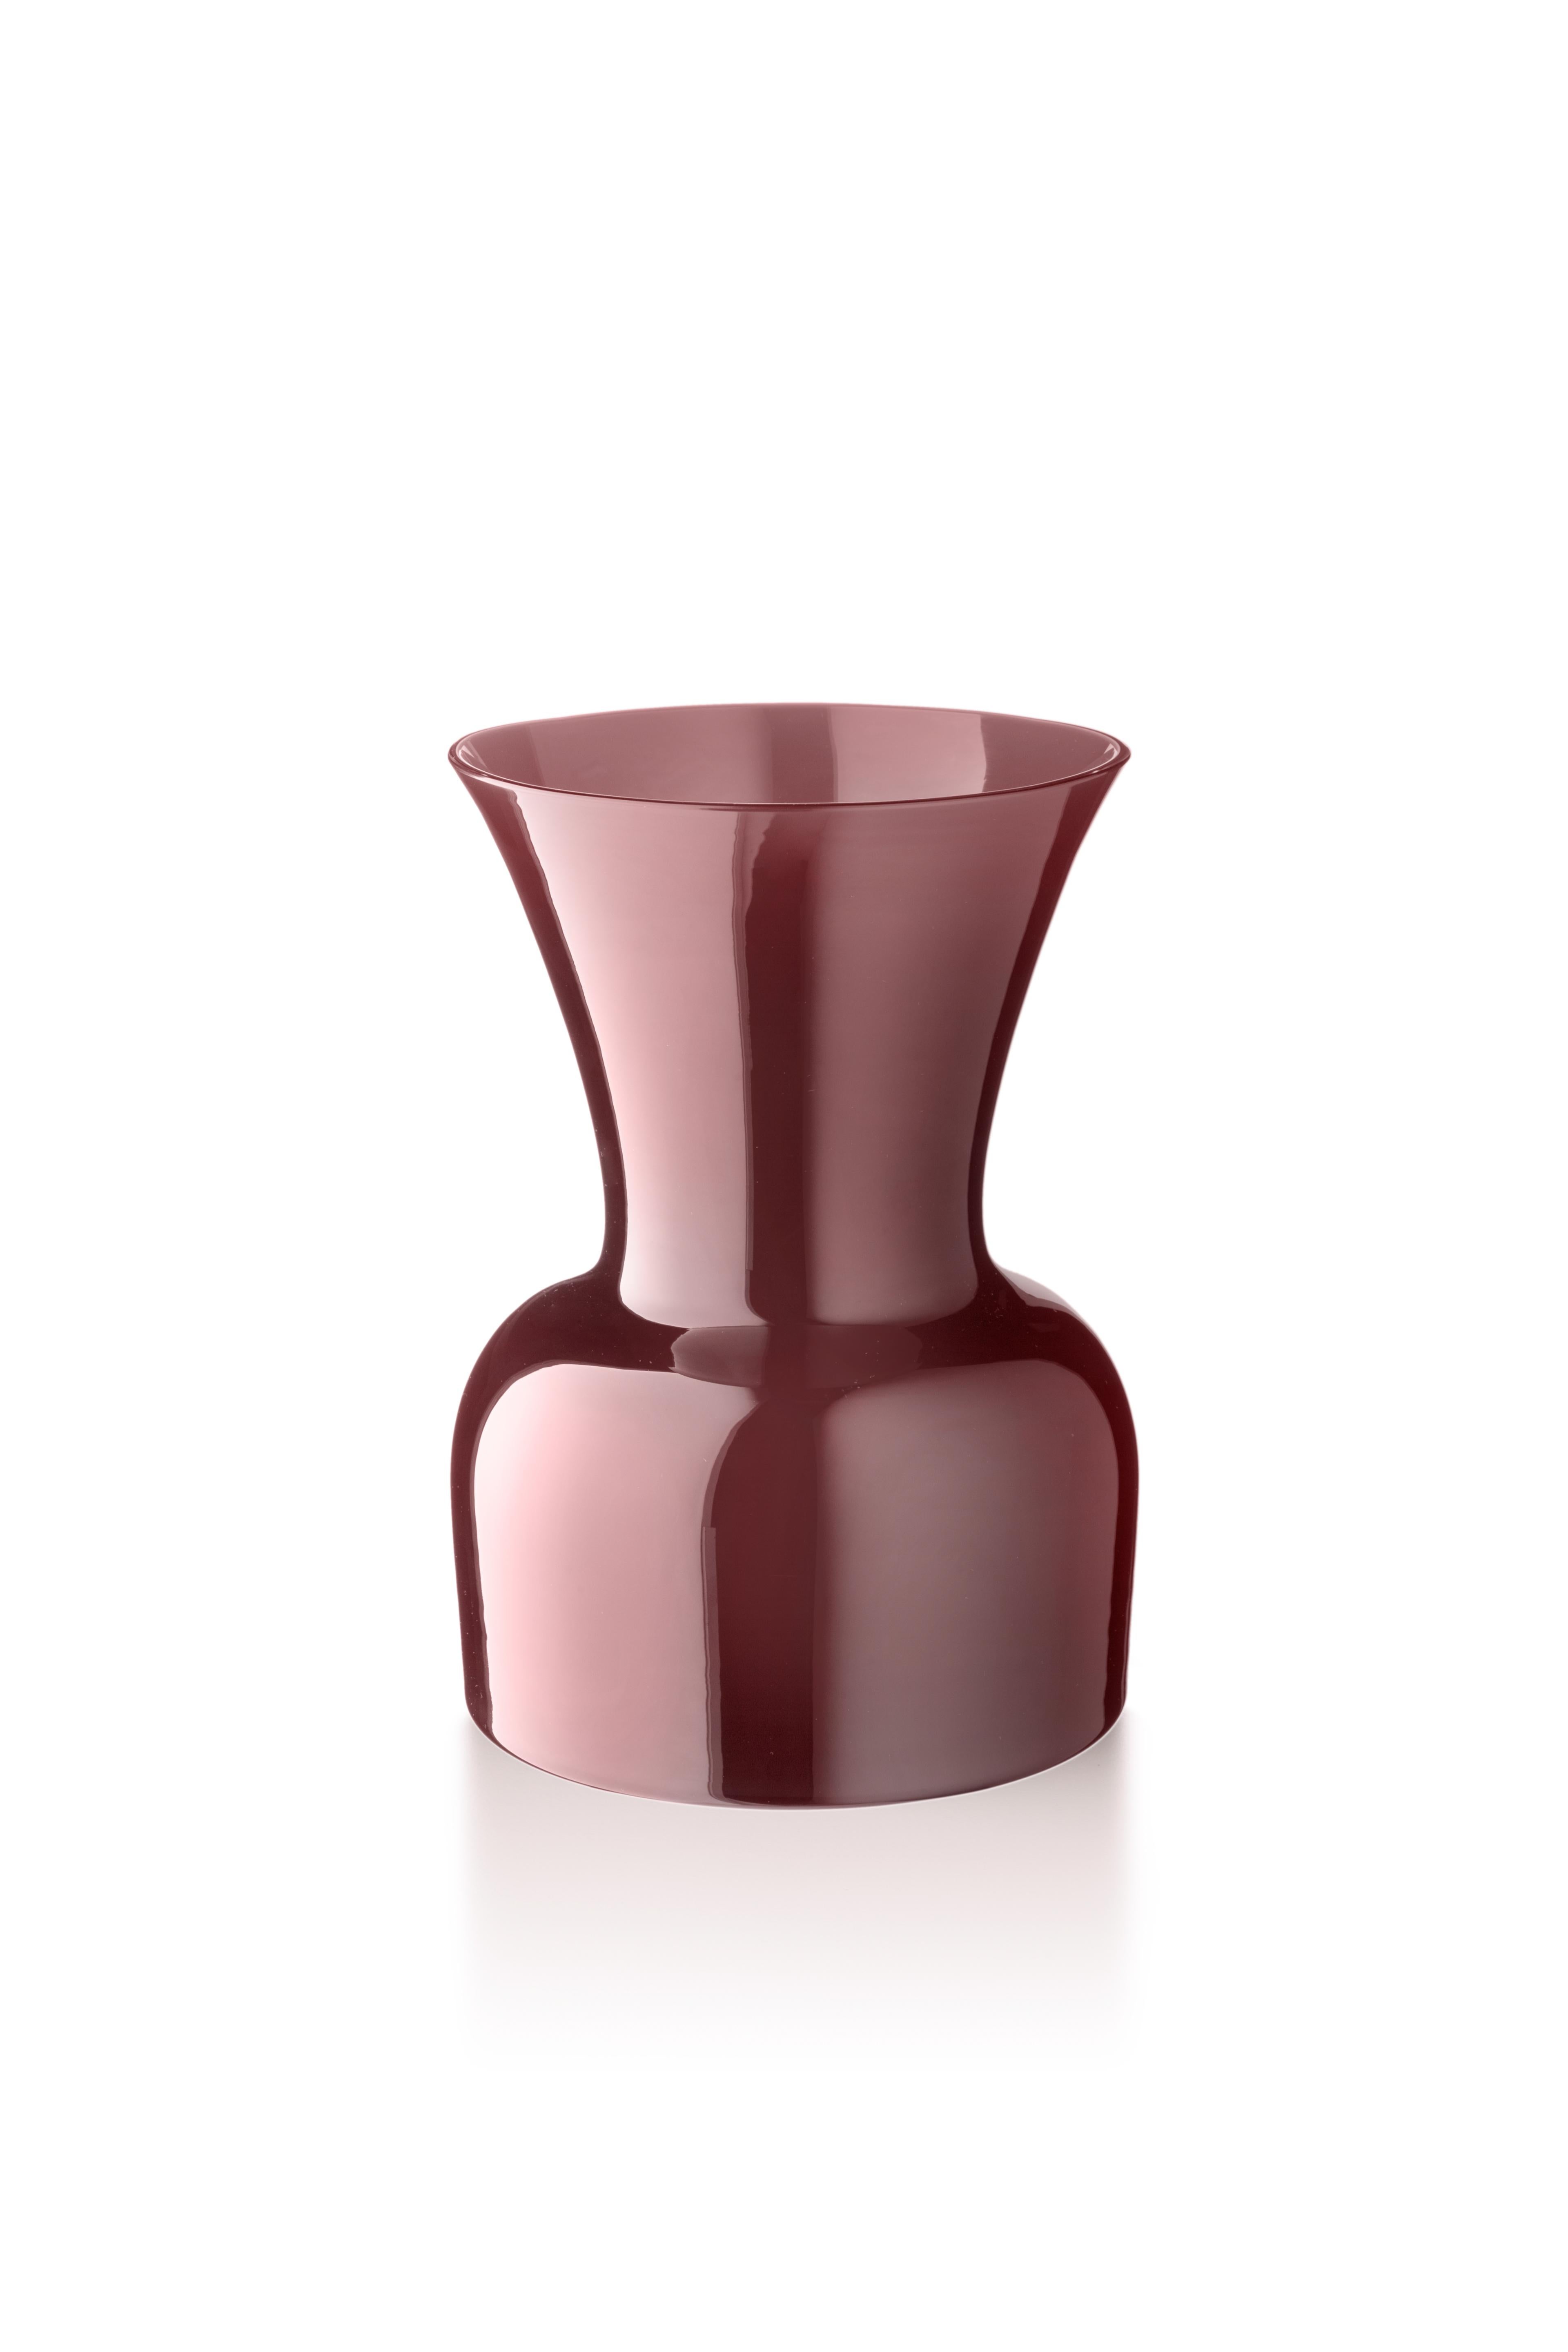 Purple (10058) Medium Profili Daisy Murano Glass Vase by Anna Gili